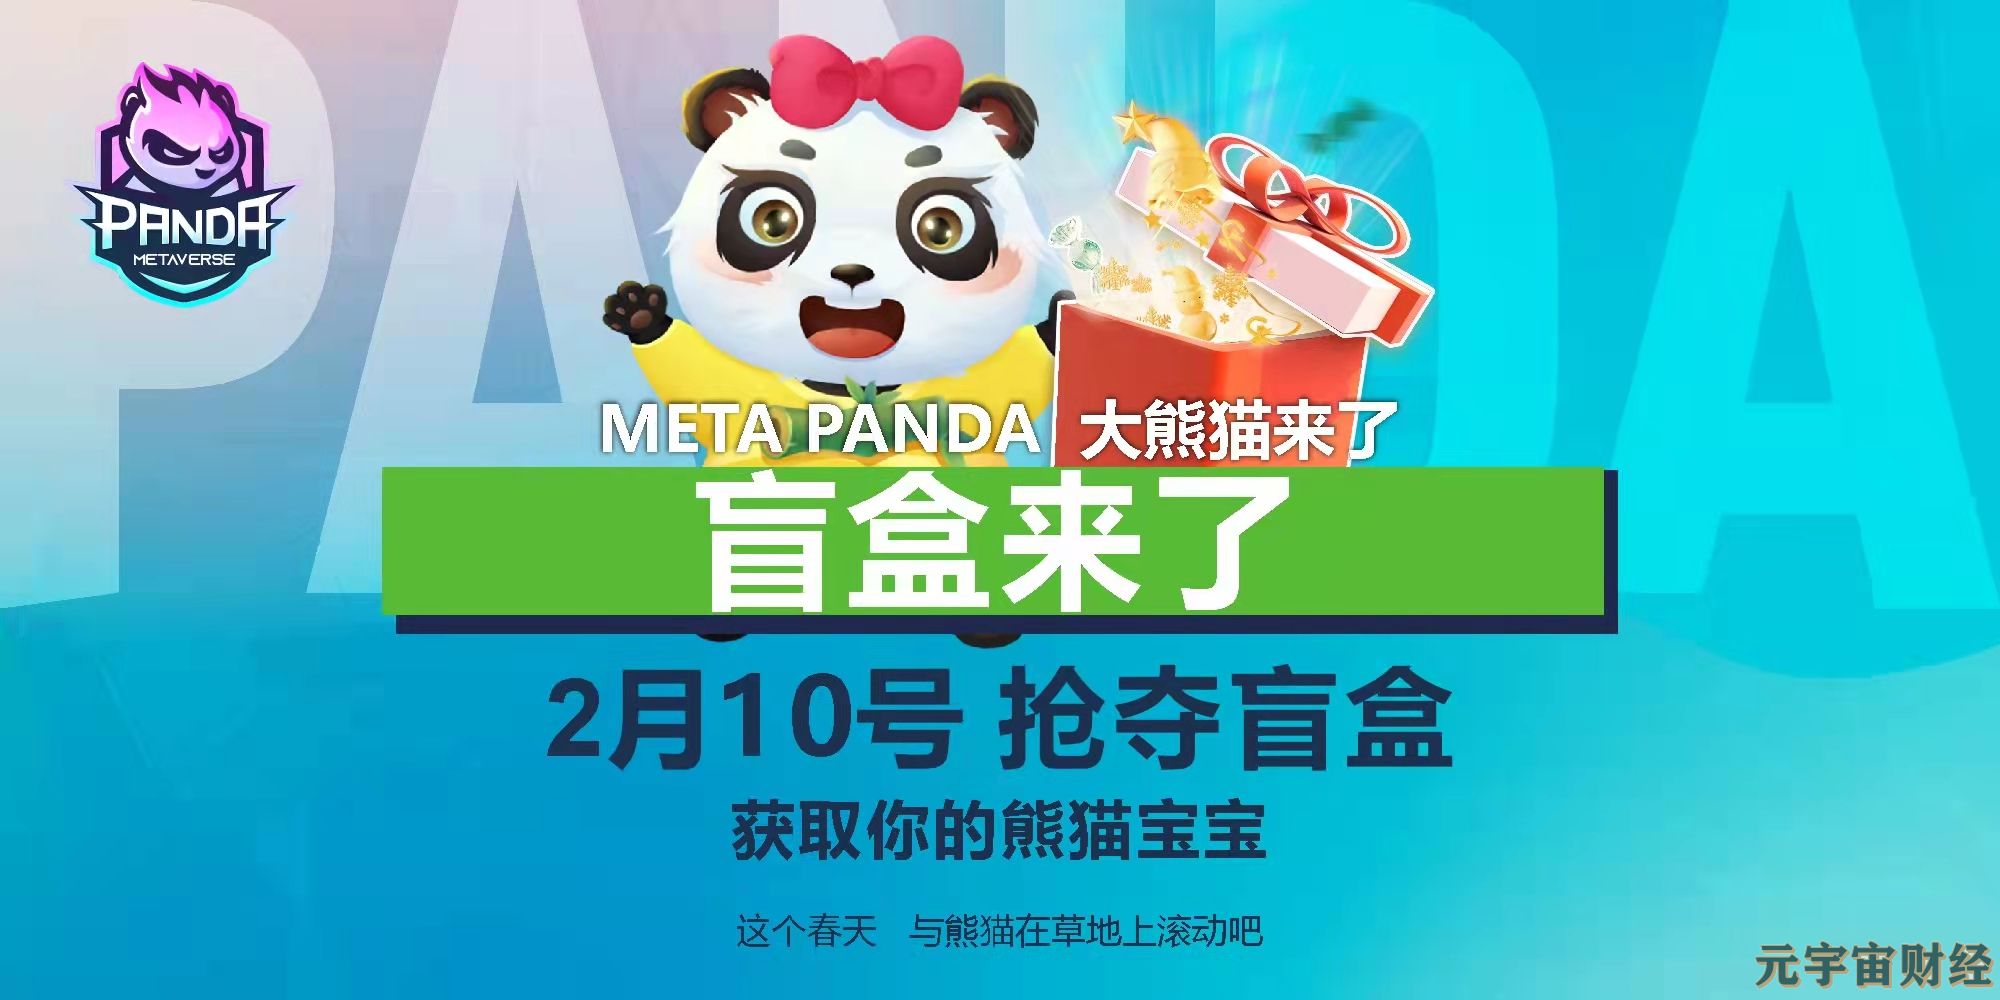 Meta Panda熊猫盲盒2月10号开放抢购  数量有限引爆抢购热潮！